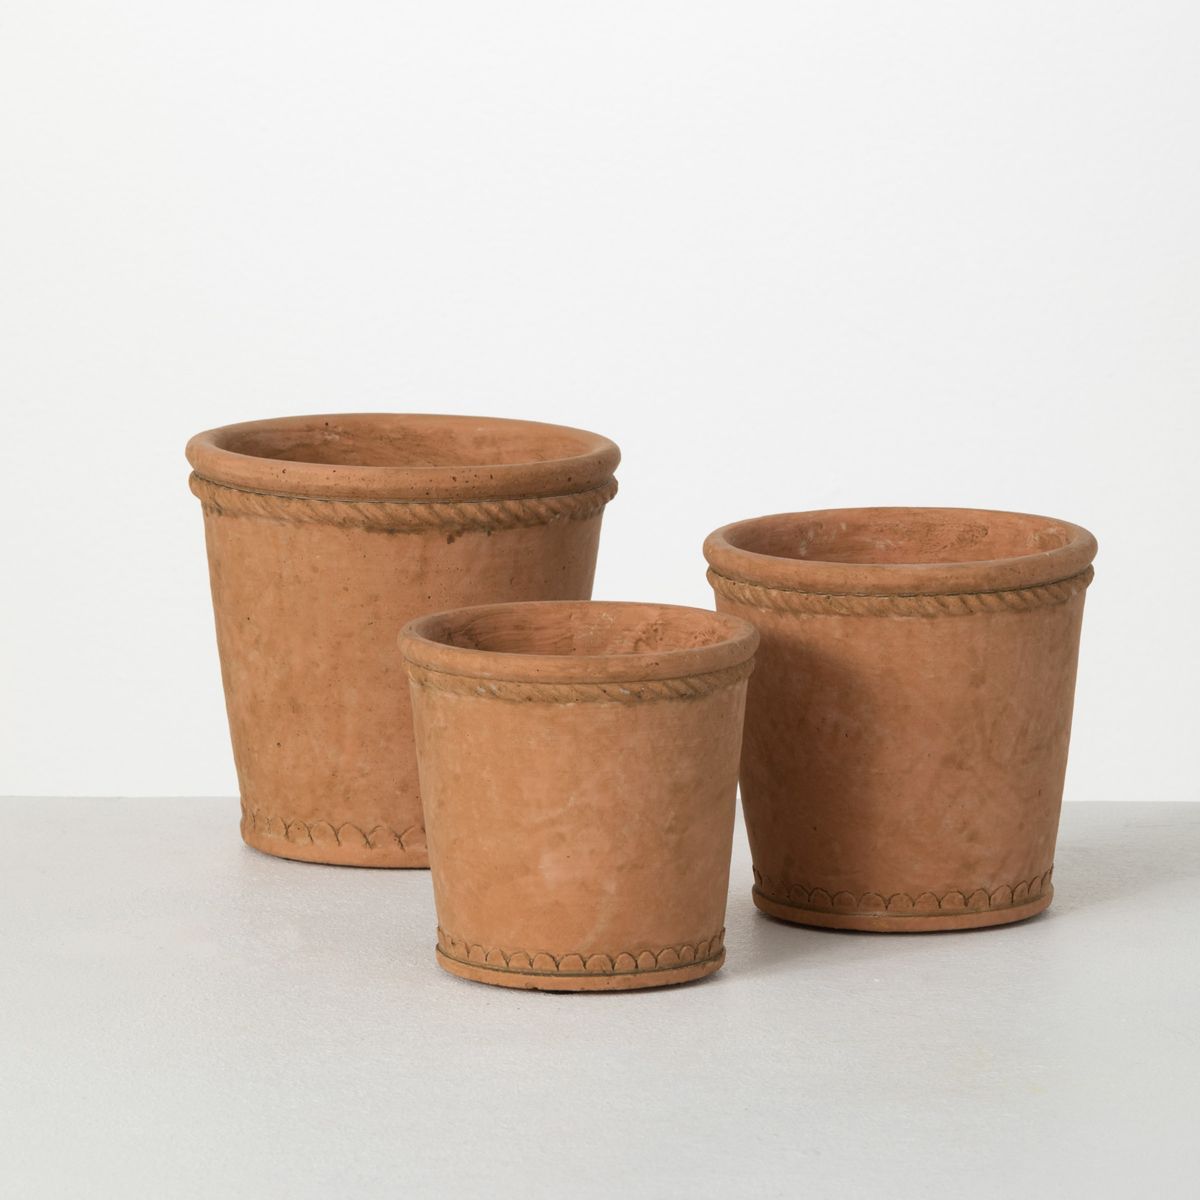 Sullivans Adobe Monochrome Ceramic Planter Set of 3, 5.25"H, 4.5"H & 4"H Brown | Target